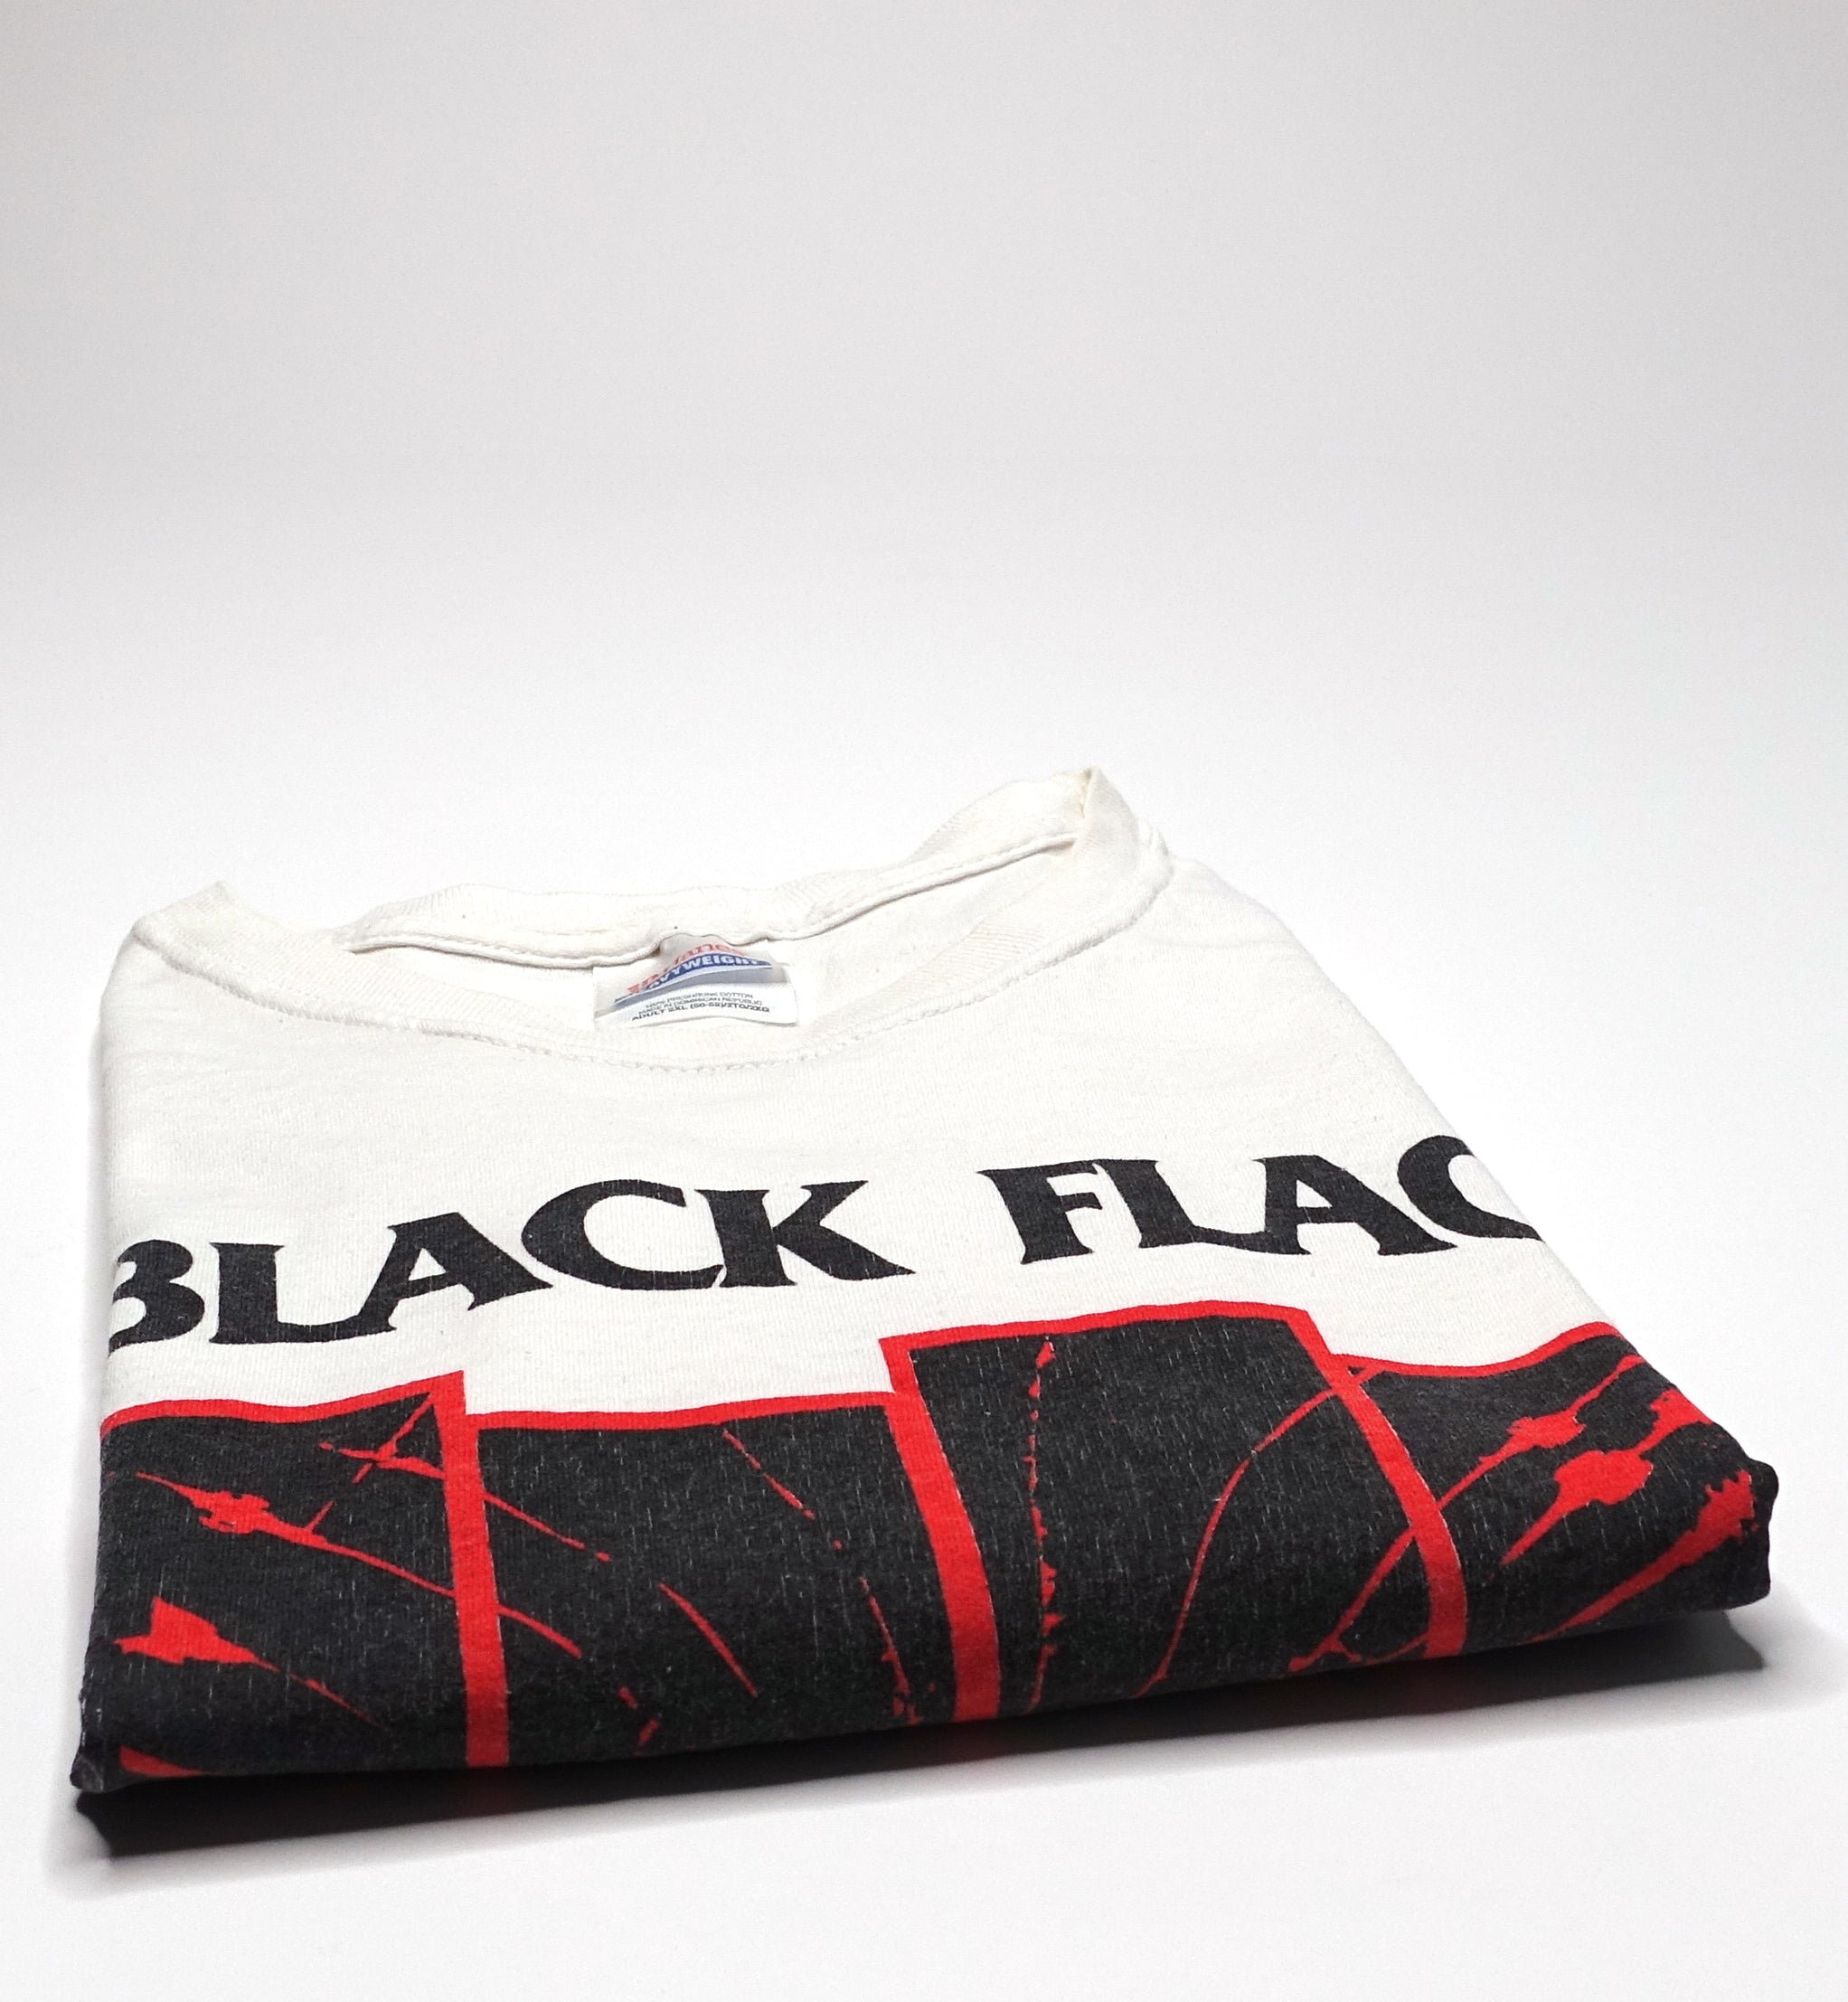 Black Flag - Damaged Tour Shirt Size XXL